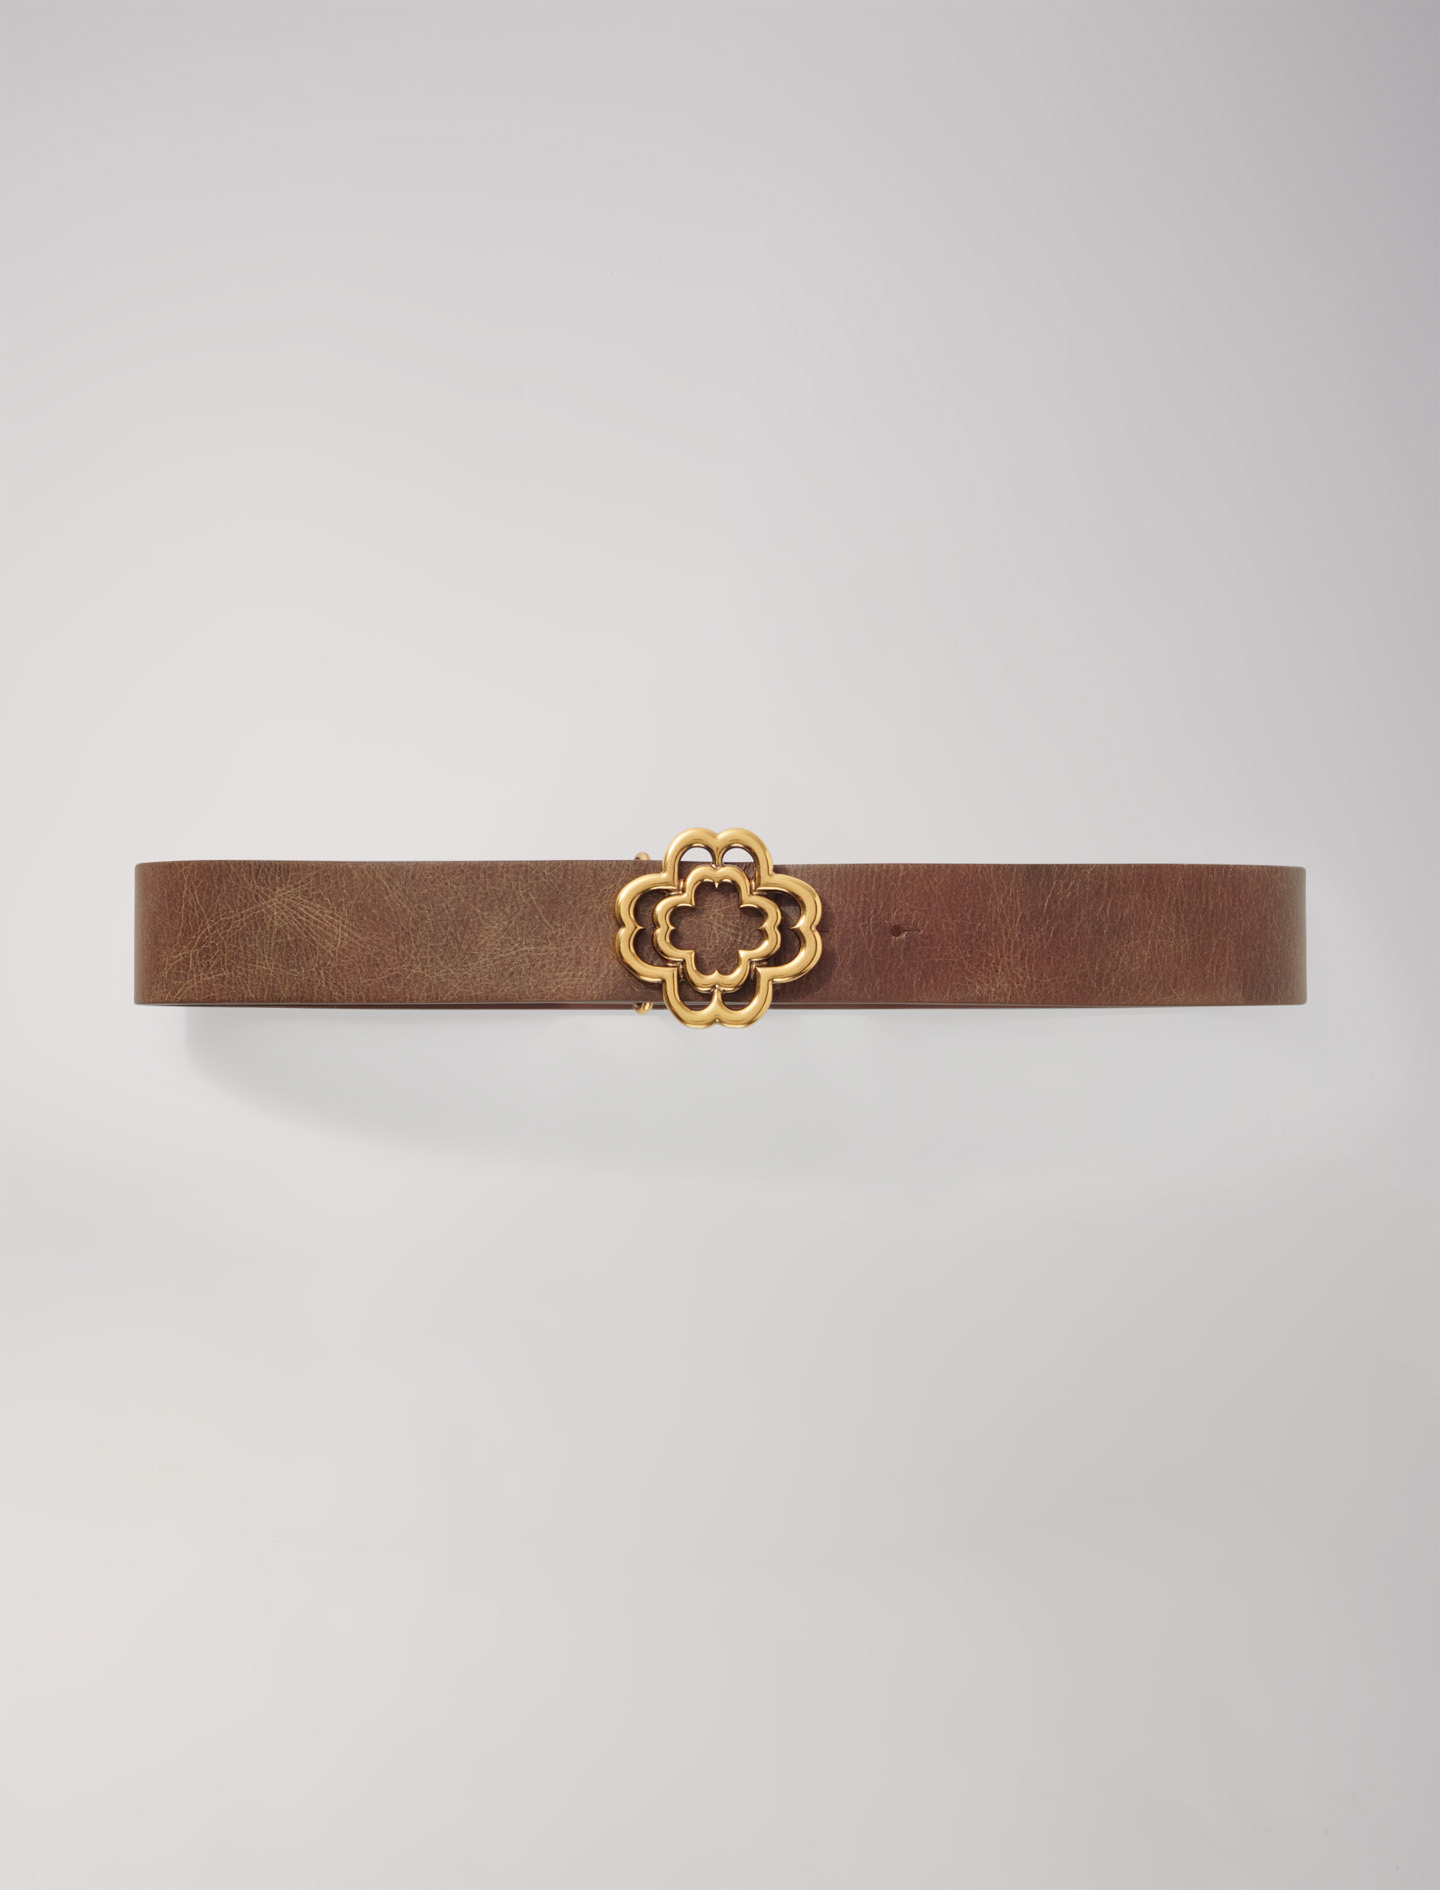 Mixte's polyester, Distressed leather Clover belt for Spring/Summer, size Mixte-Belts-US L / FR 3, in color Old brown /